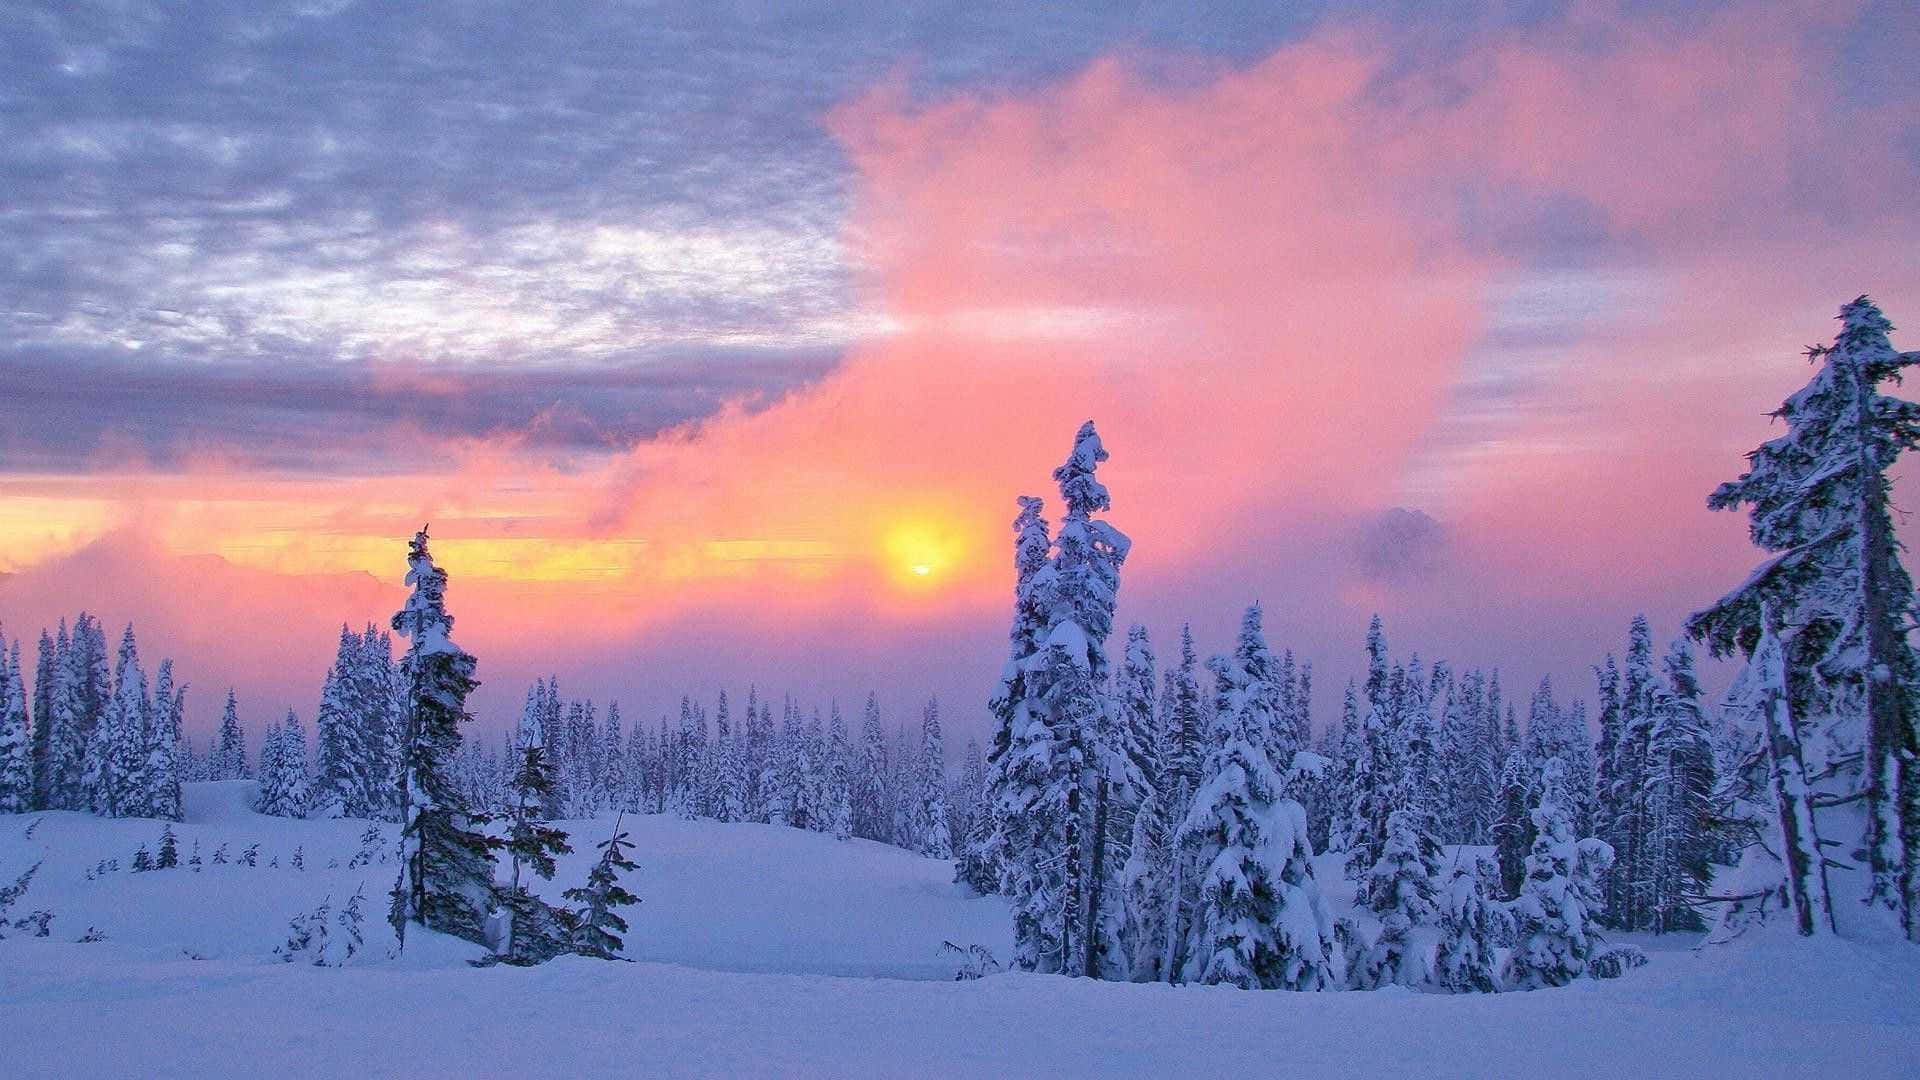 Paisajeinvernal Pintoresco Cubierto De Nieve. Fondo de pantalla